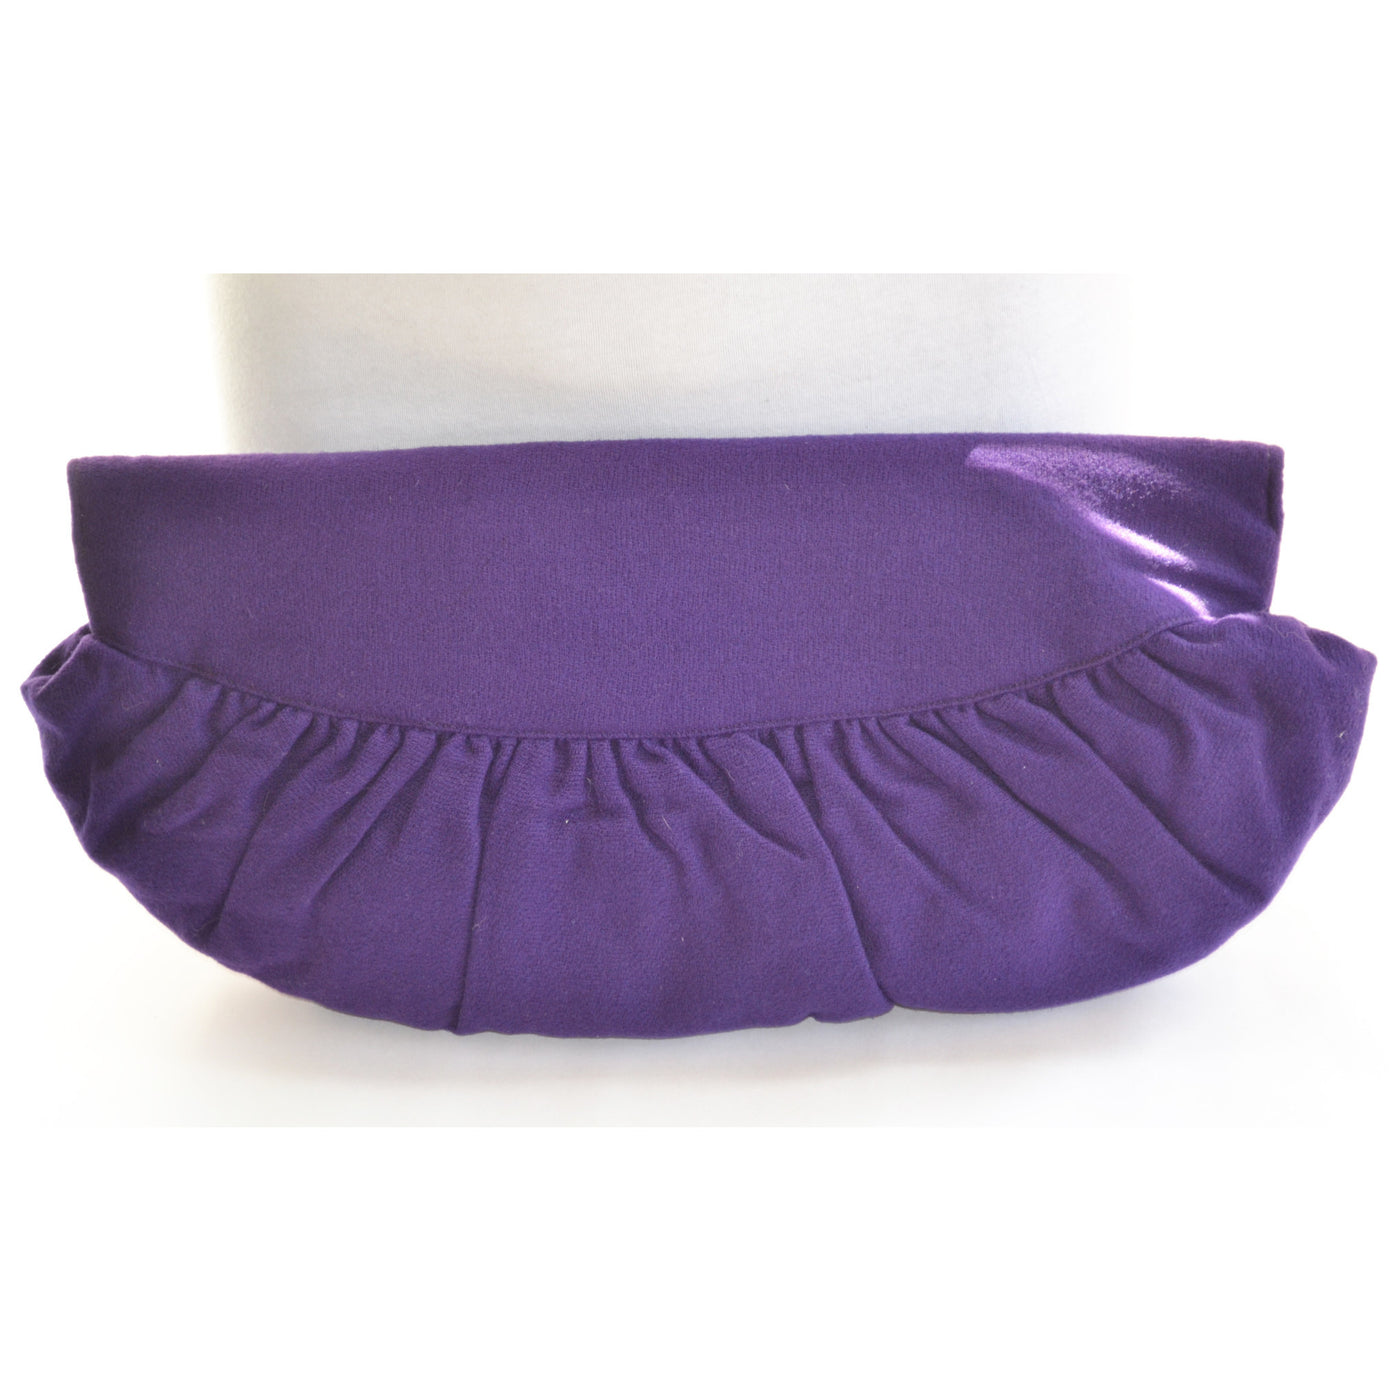 Vintage Elongated Purple Wool Clutch Purse